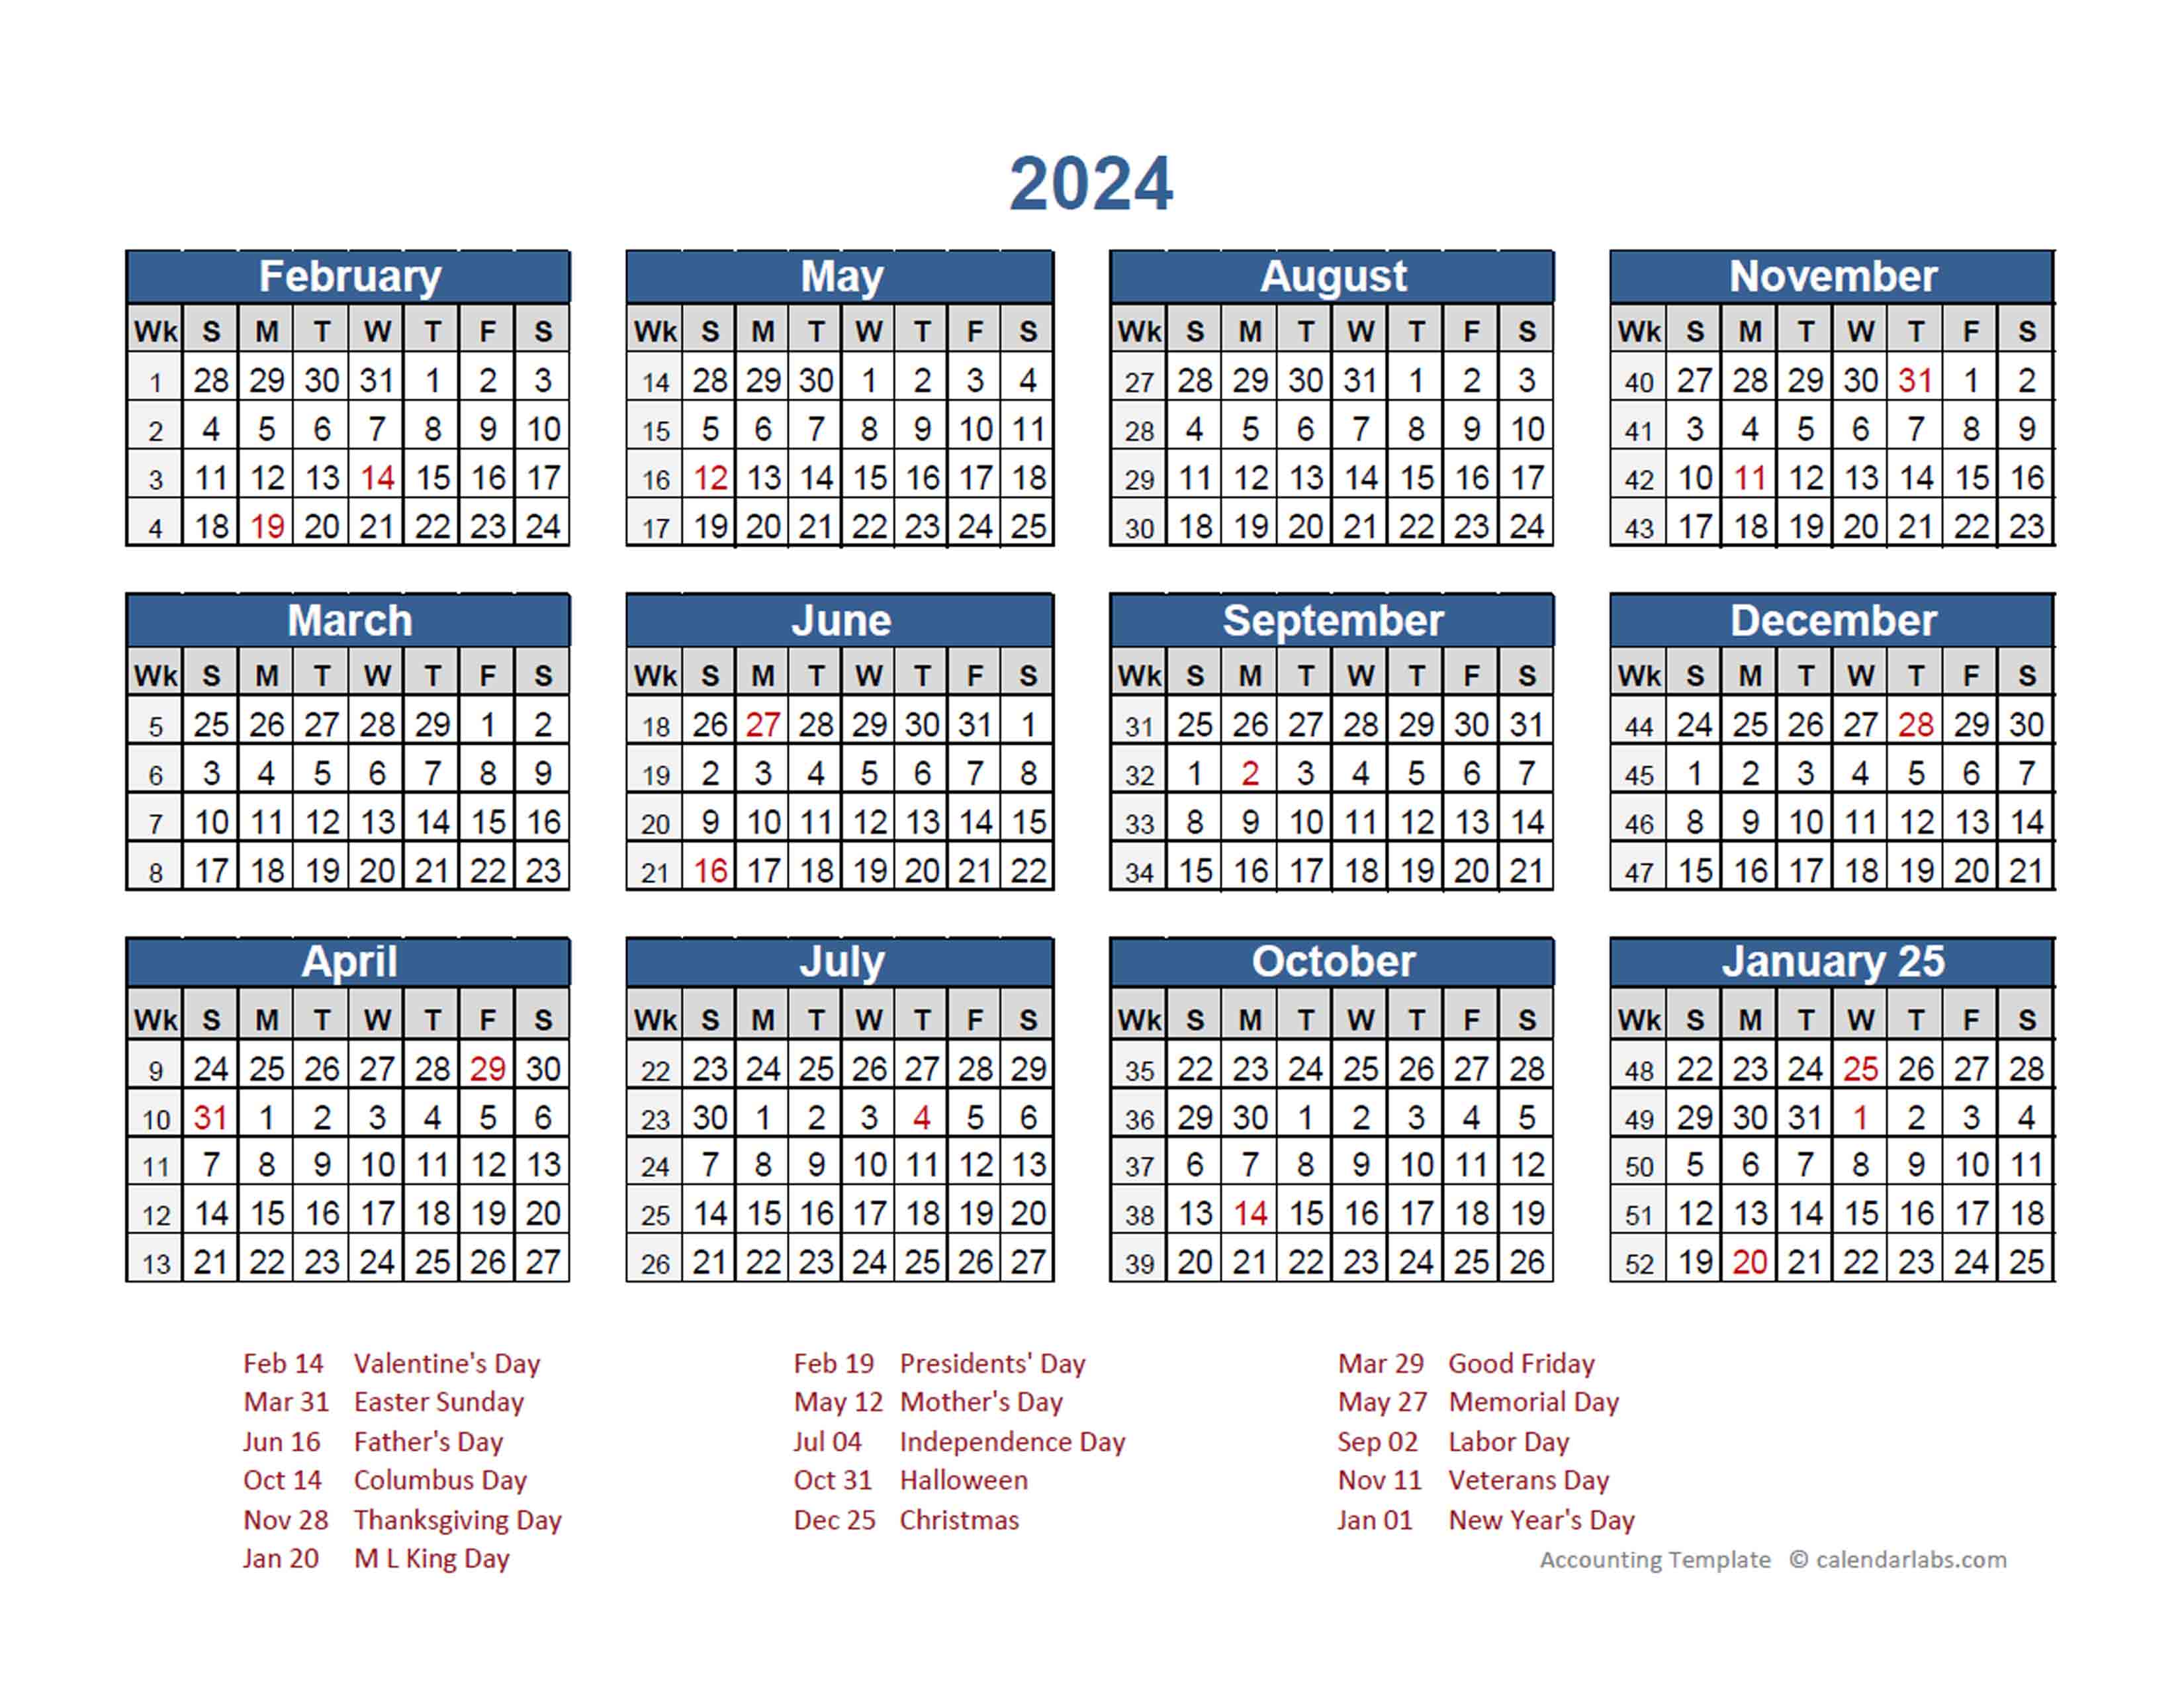 2024 Retail Accounting Calendar 445 Free Printable Templates